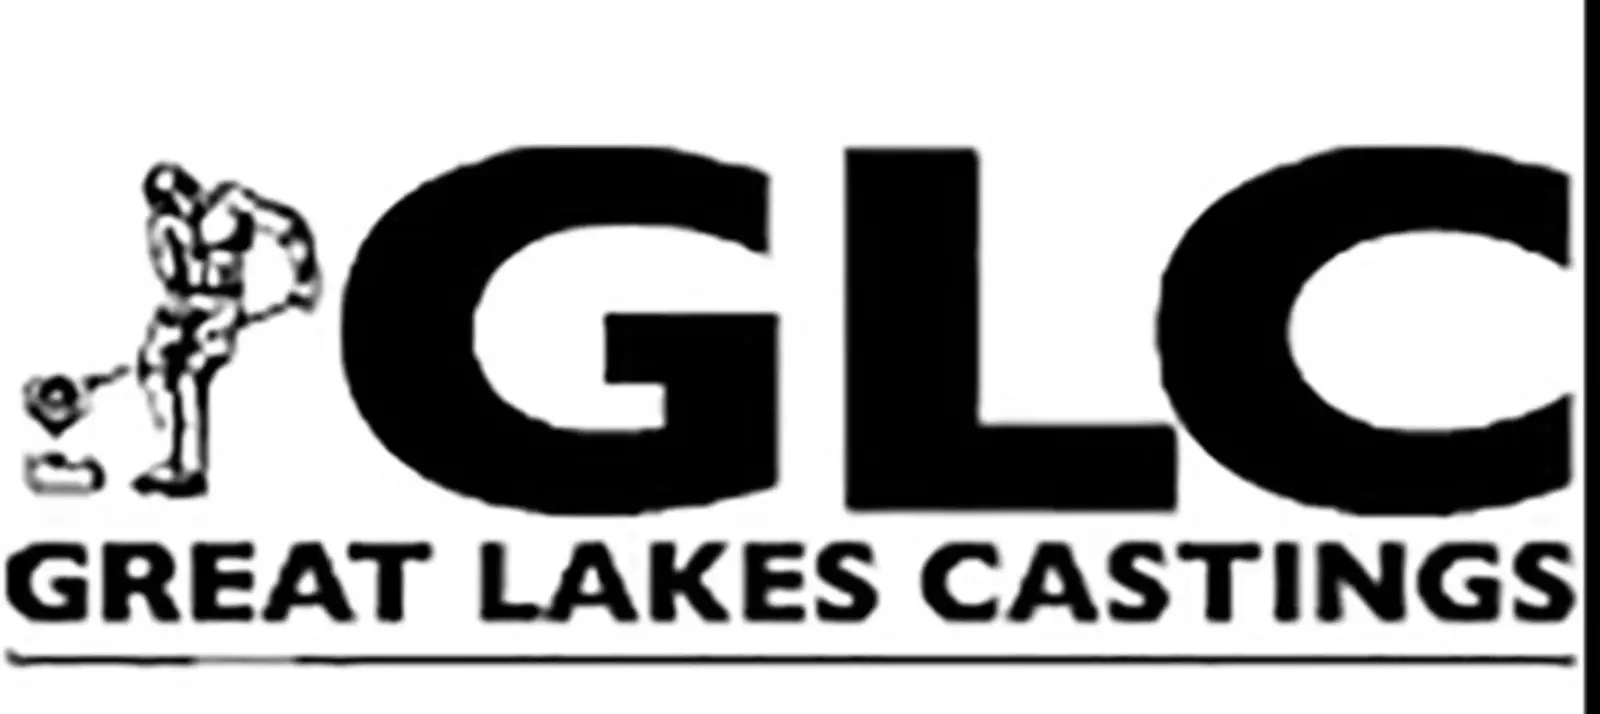 GLC Great Lakes Castings logo